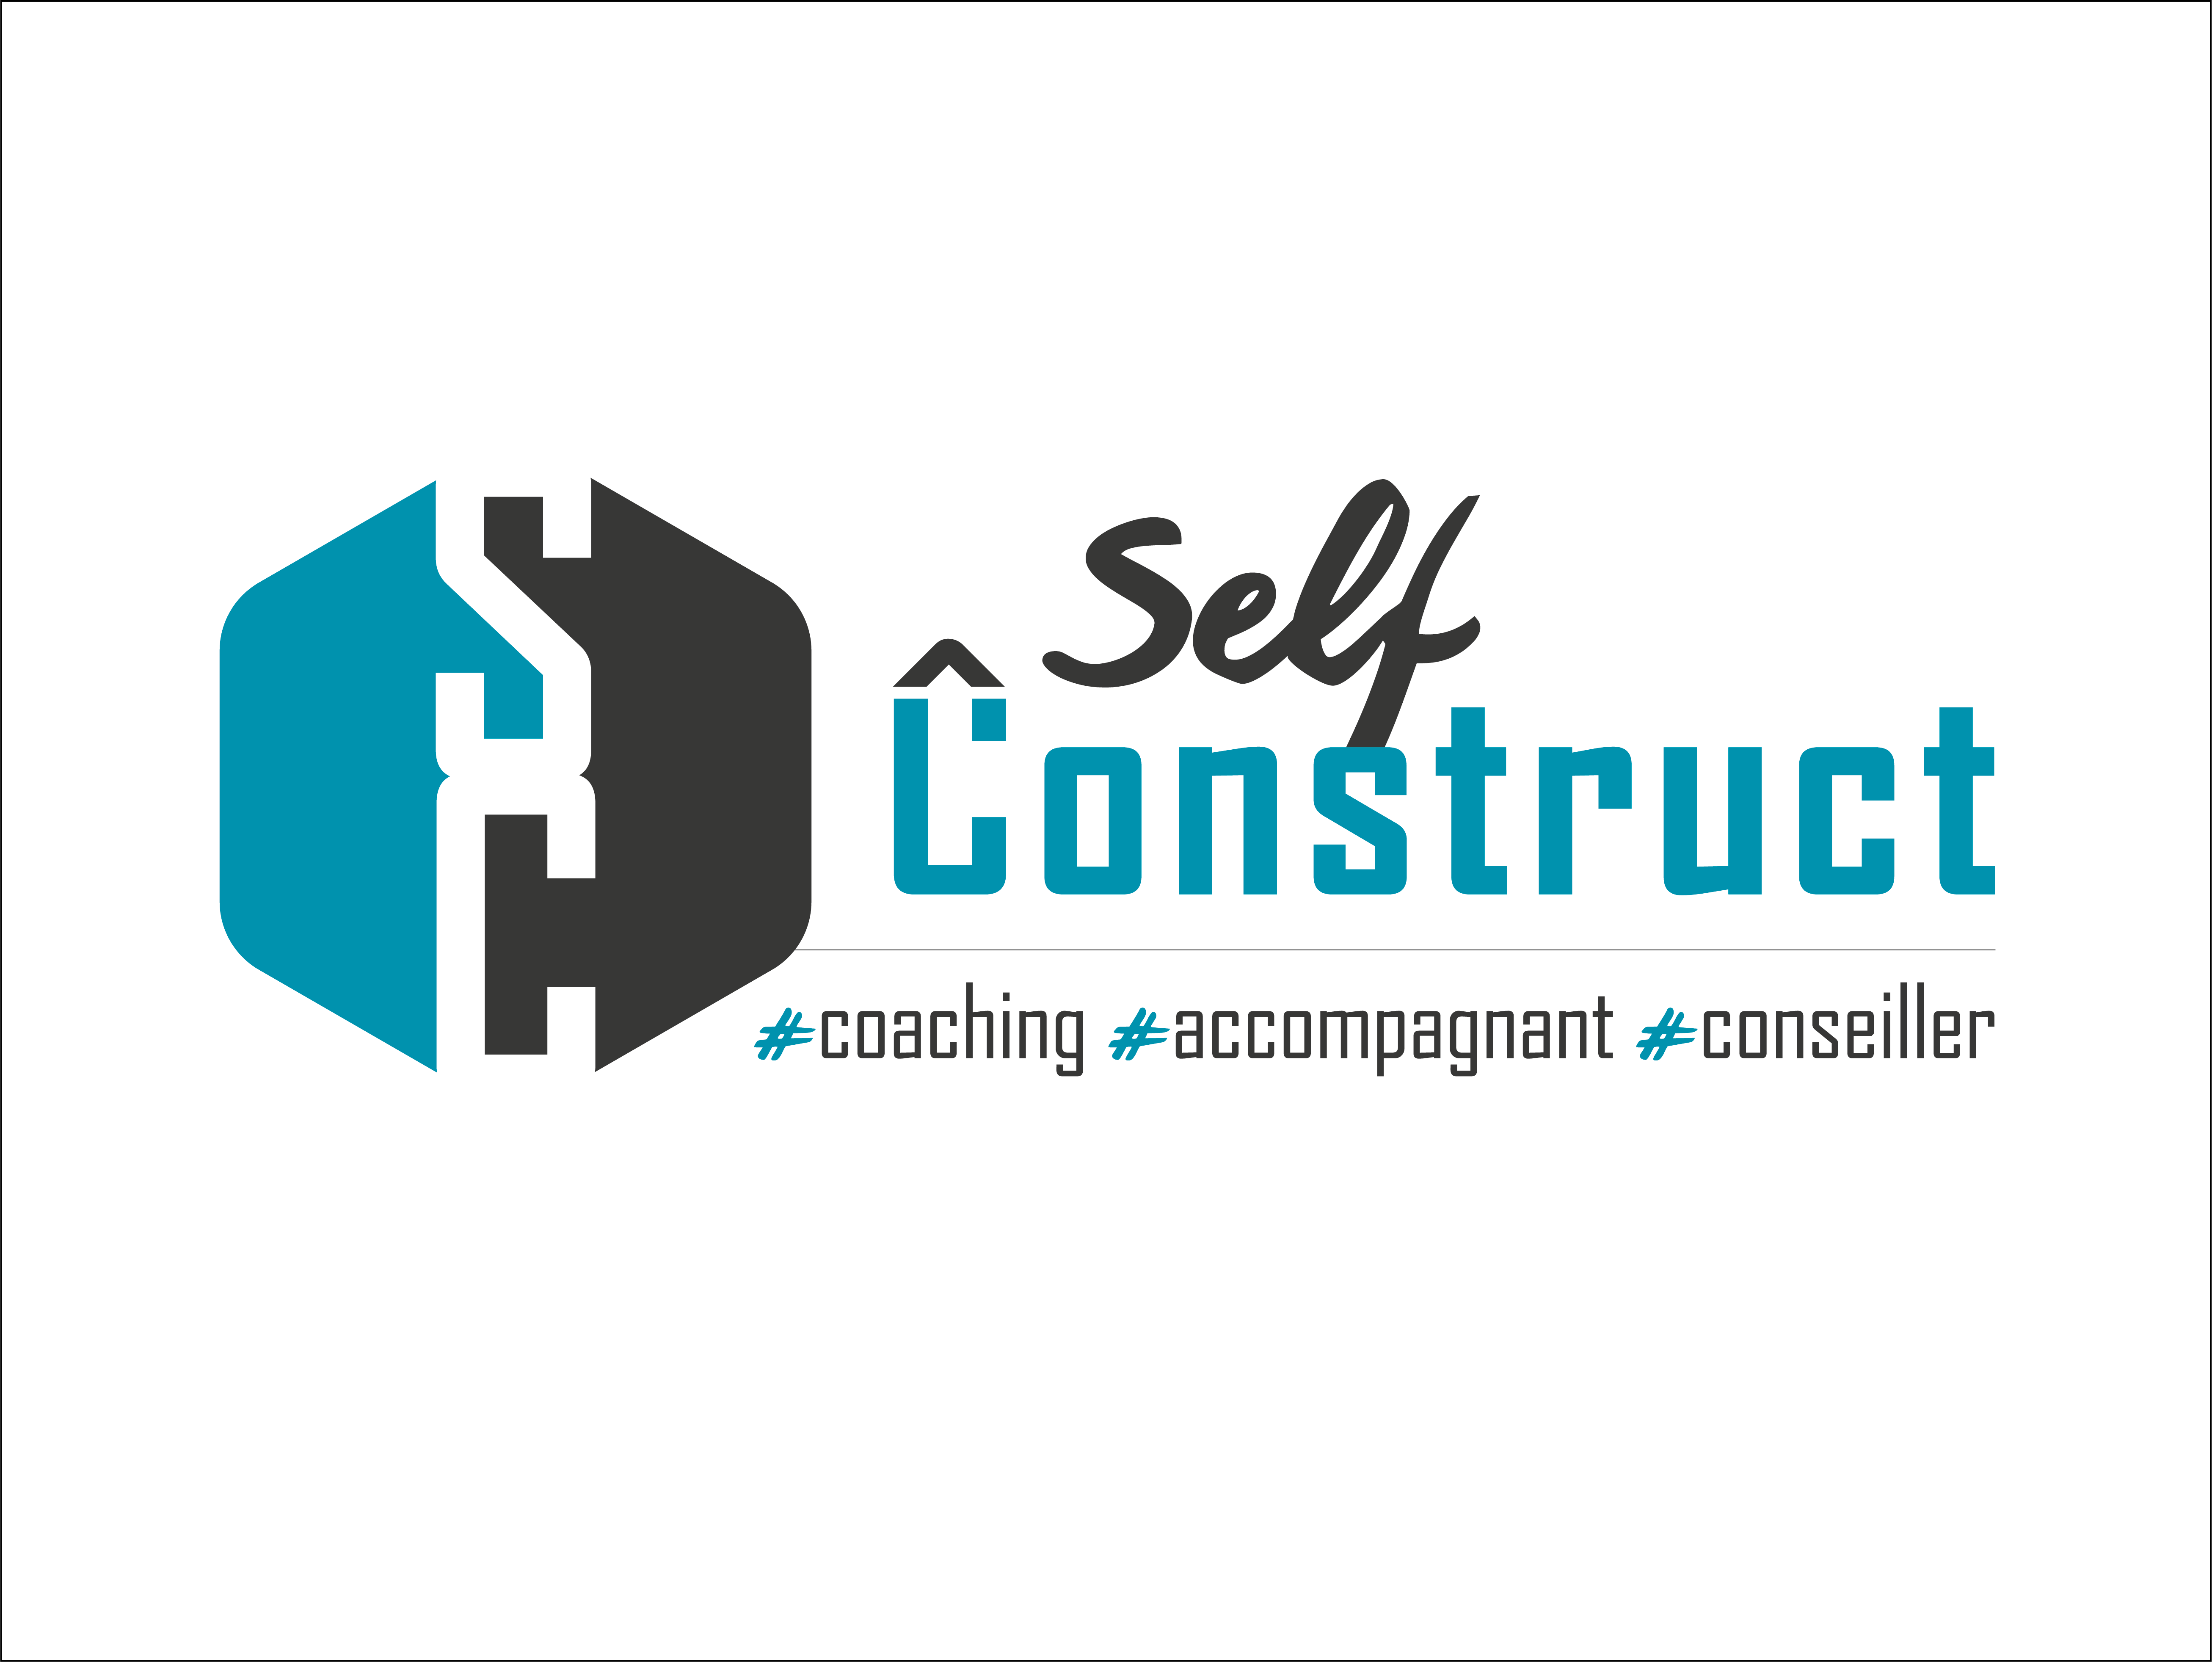 Self Construct